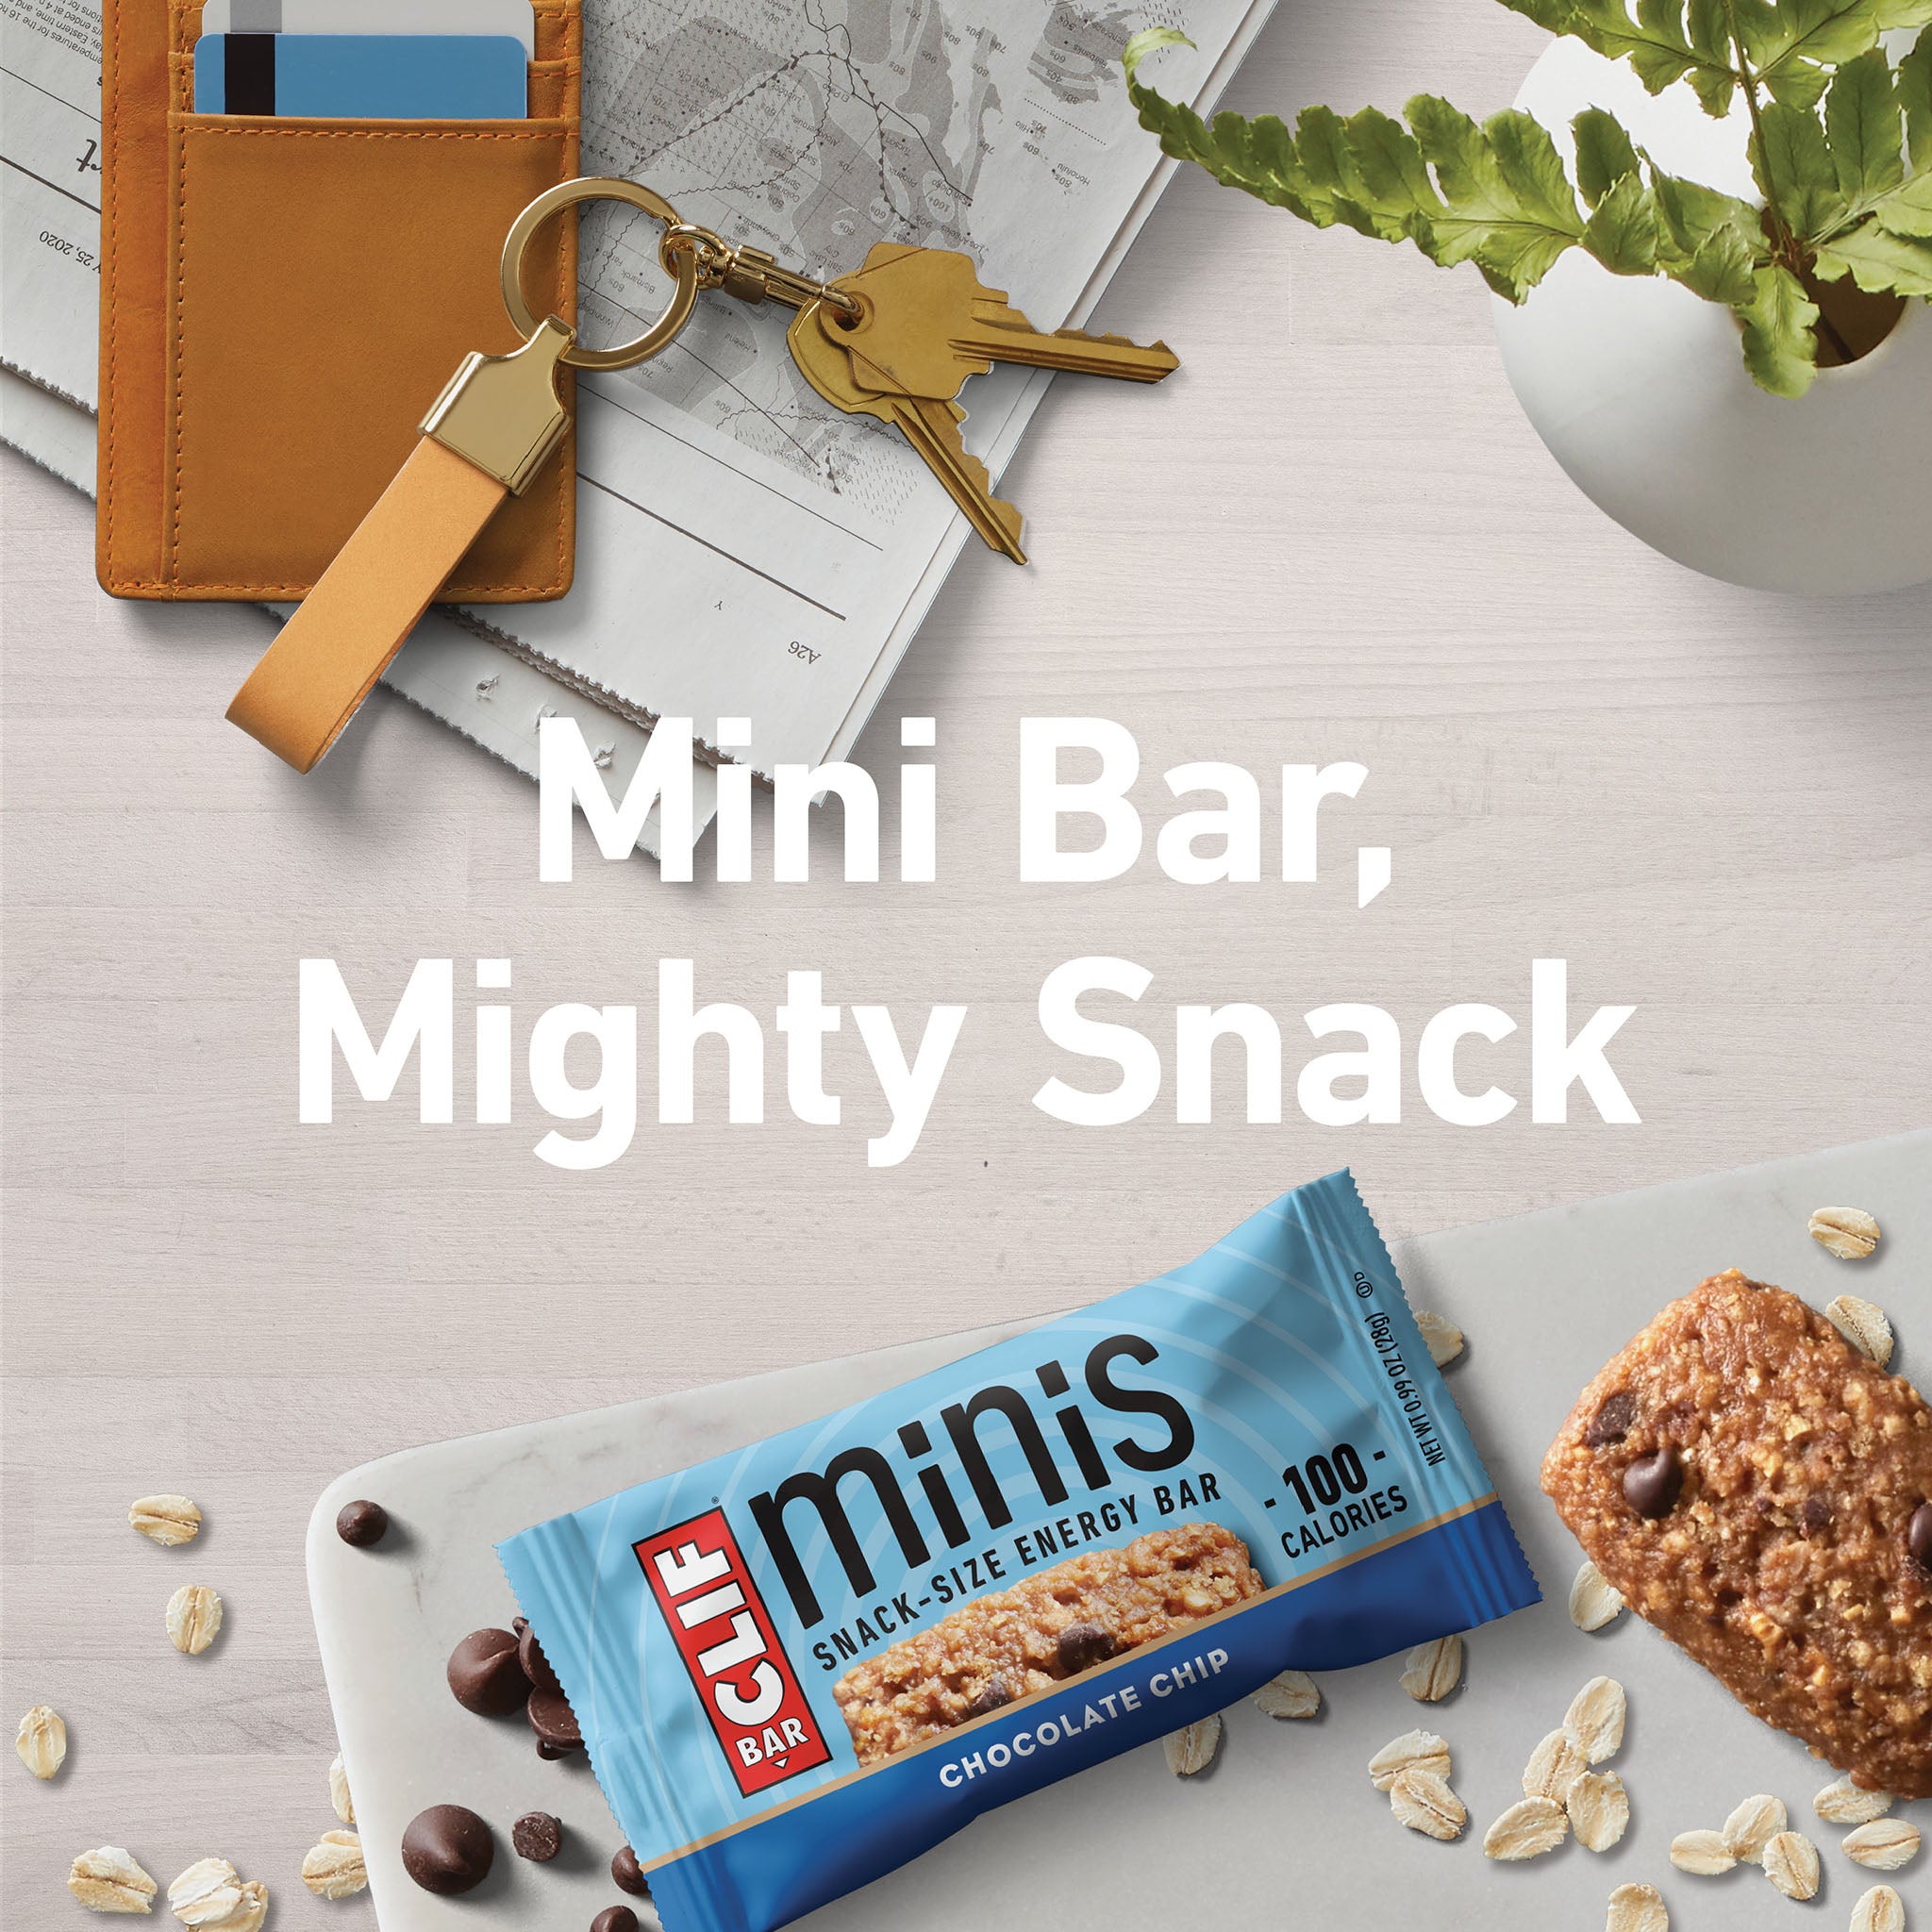 Clif Bar Energy Bars, Chocolate Chip, Minis, 20 Pack - 20 pack, 0.99 oz bars